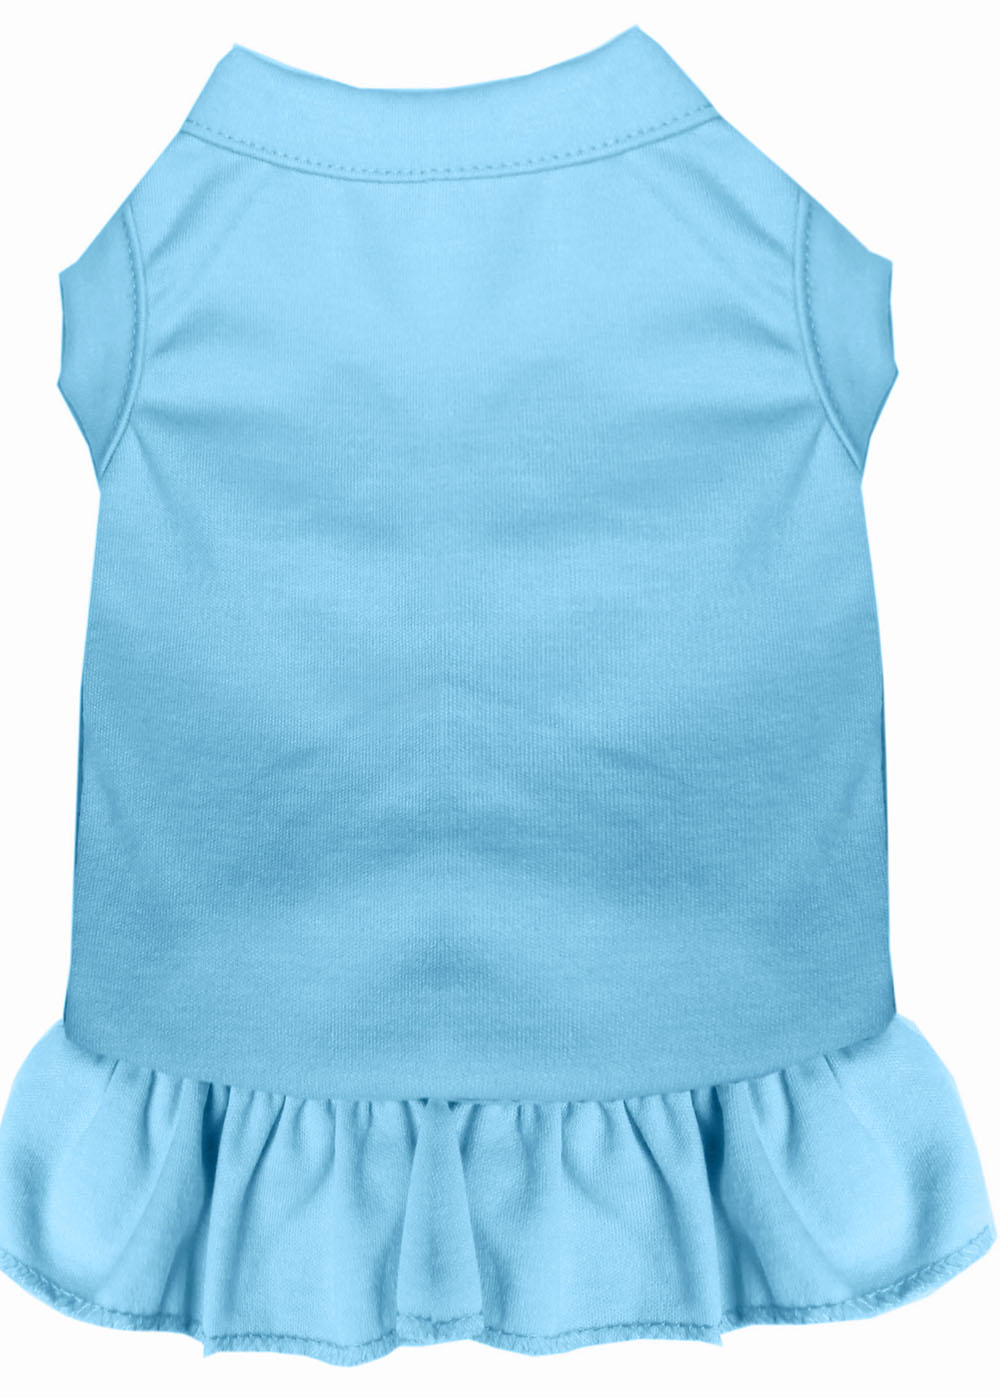 Plain Pet Dress Baby Blue Med